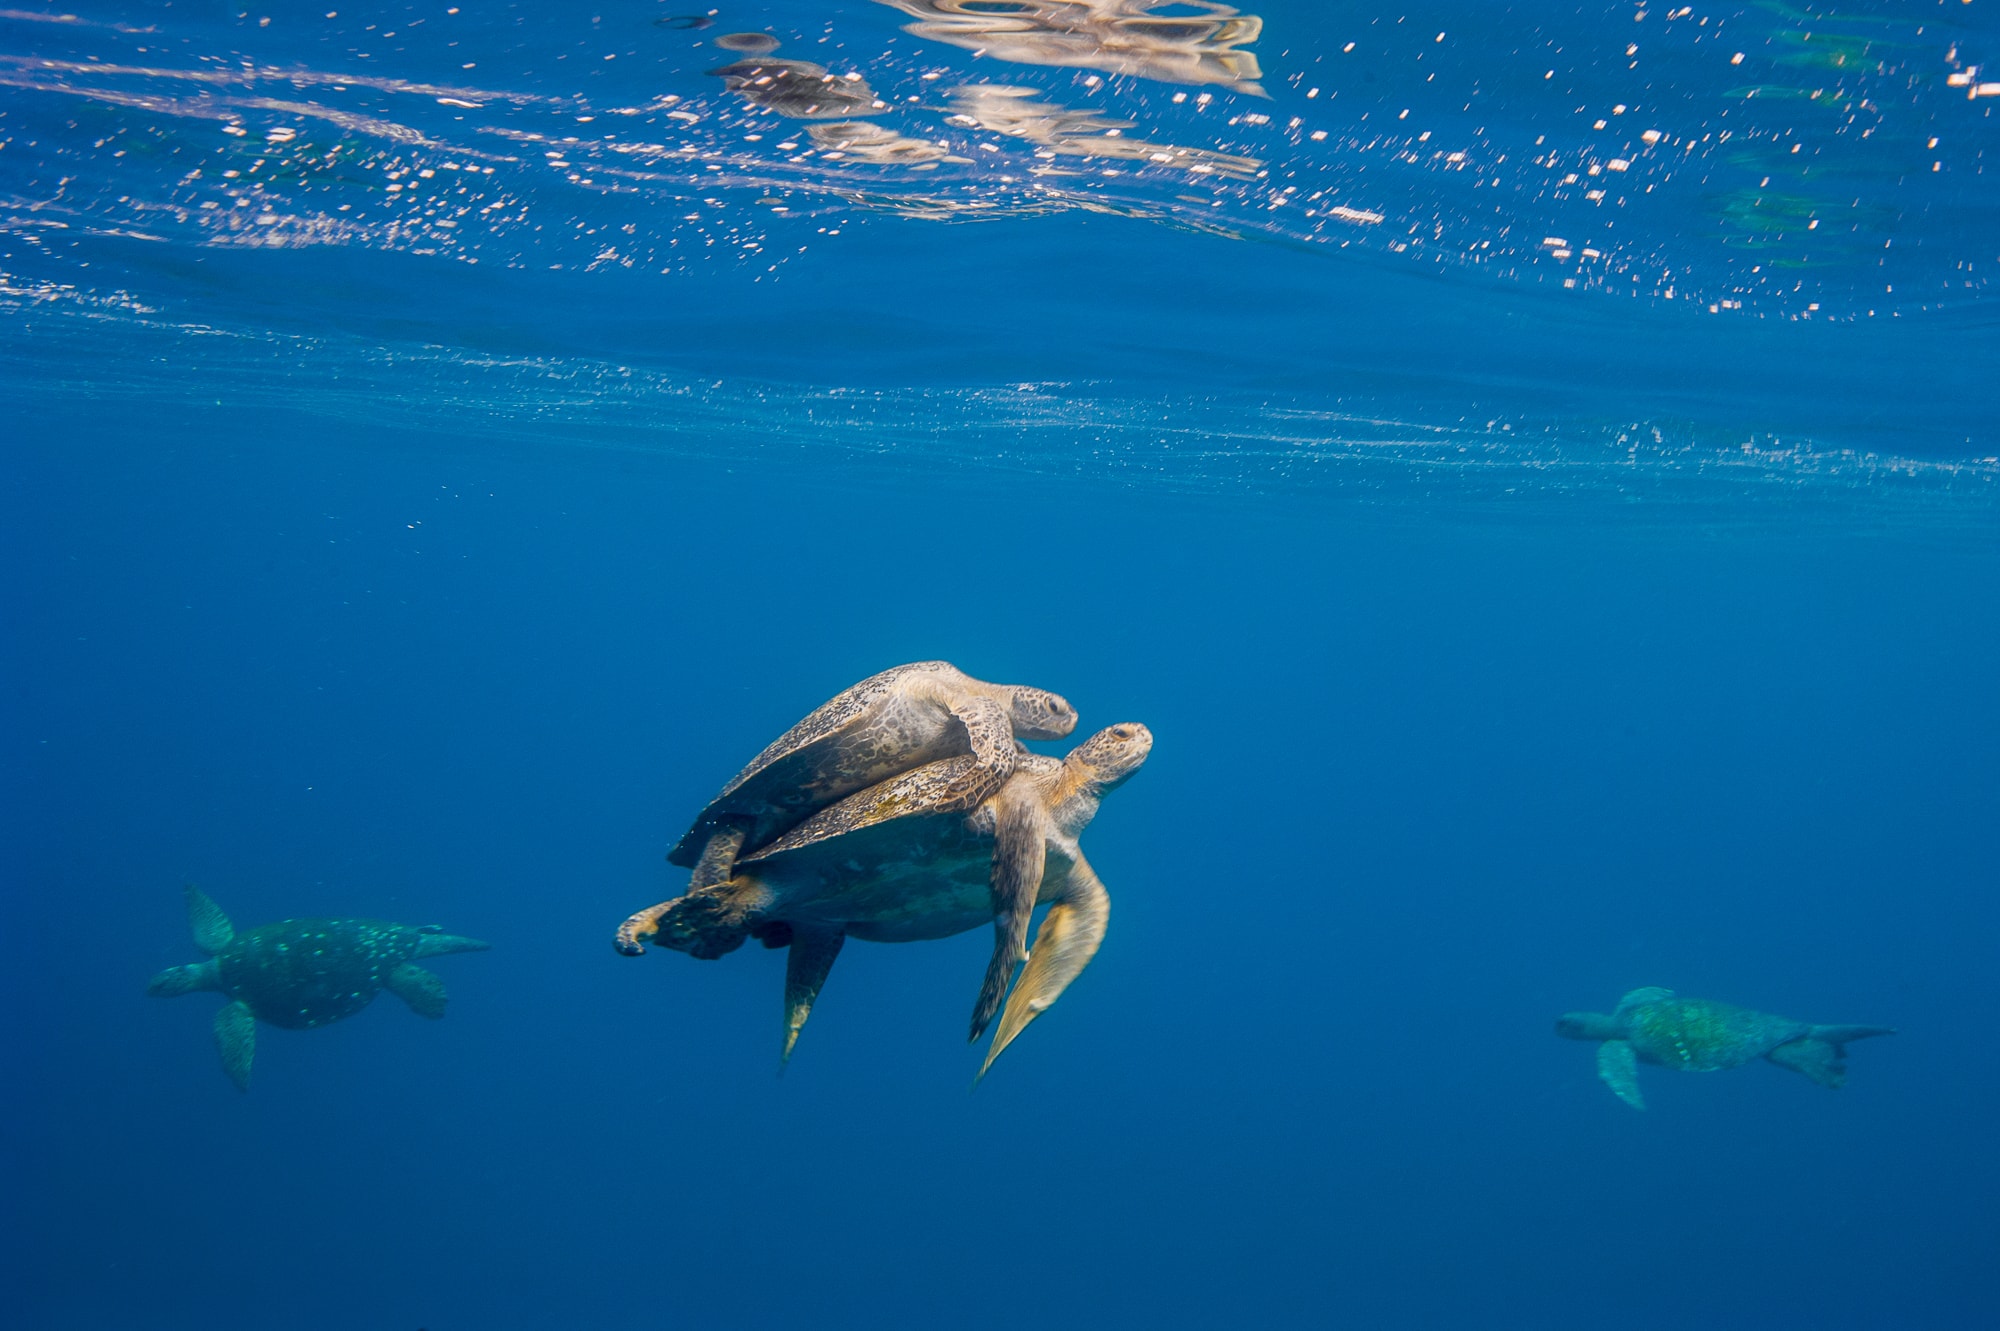 Black Sea Turtles mating in Baja California Sur, Mexico.